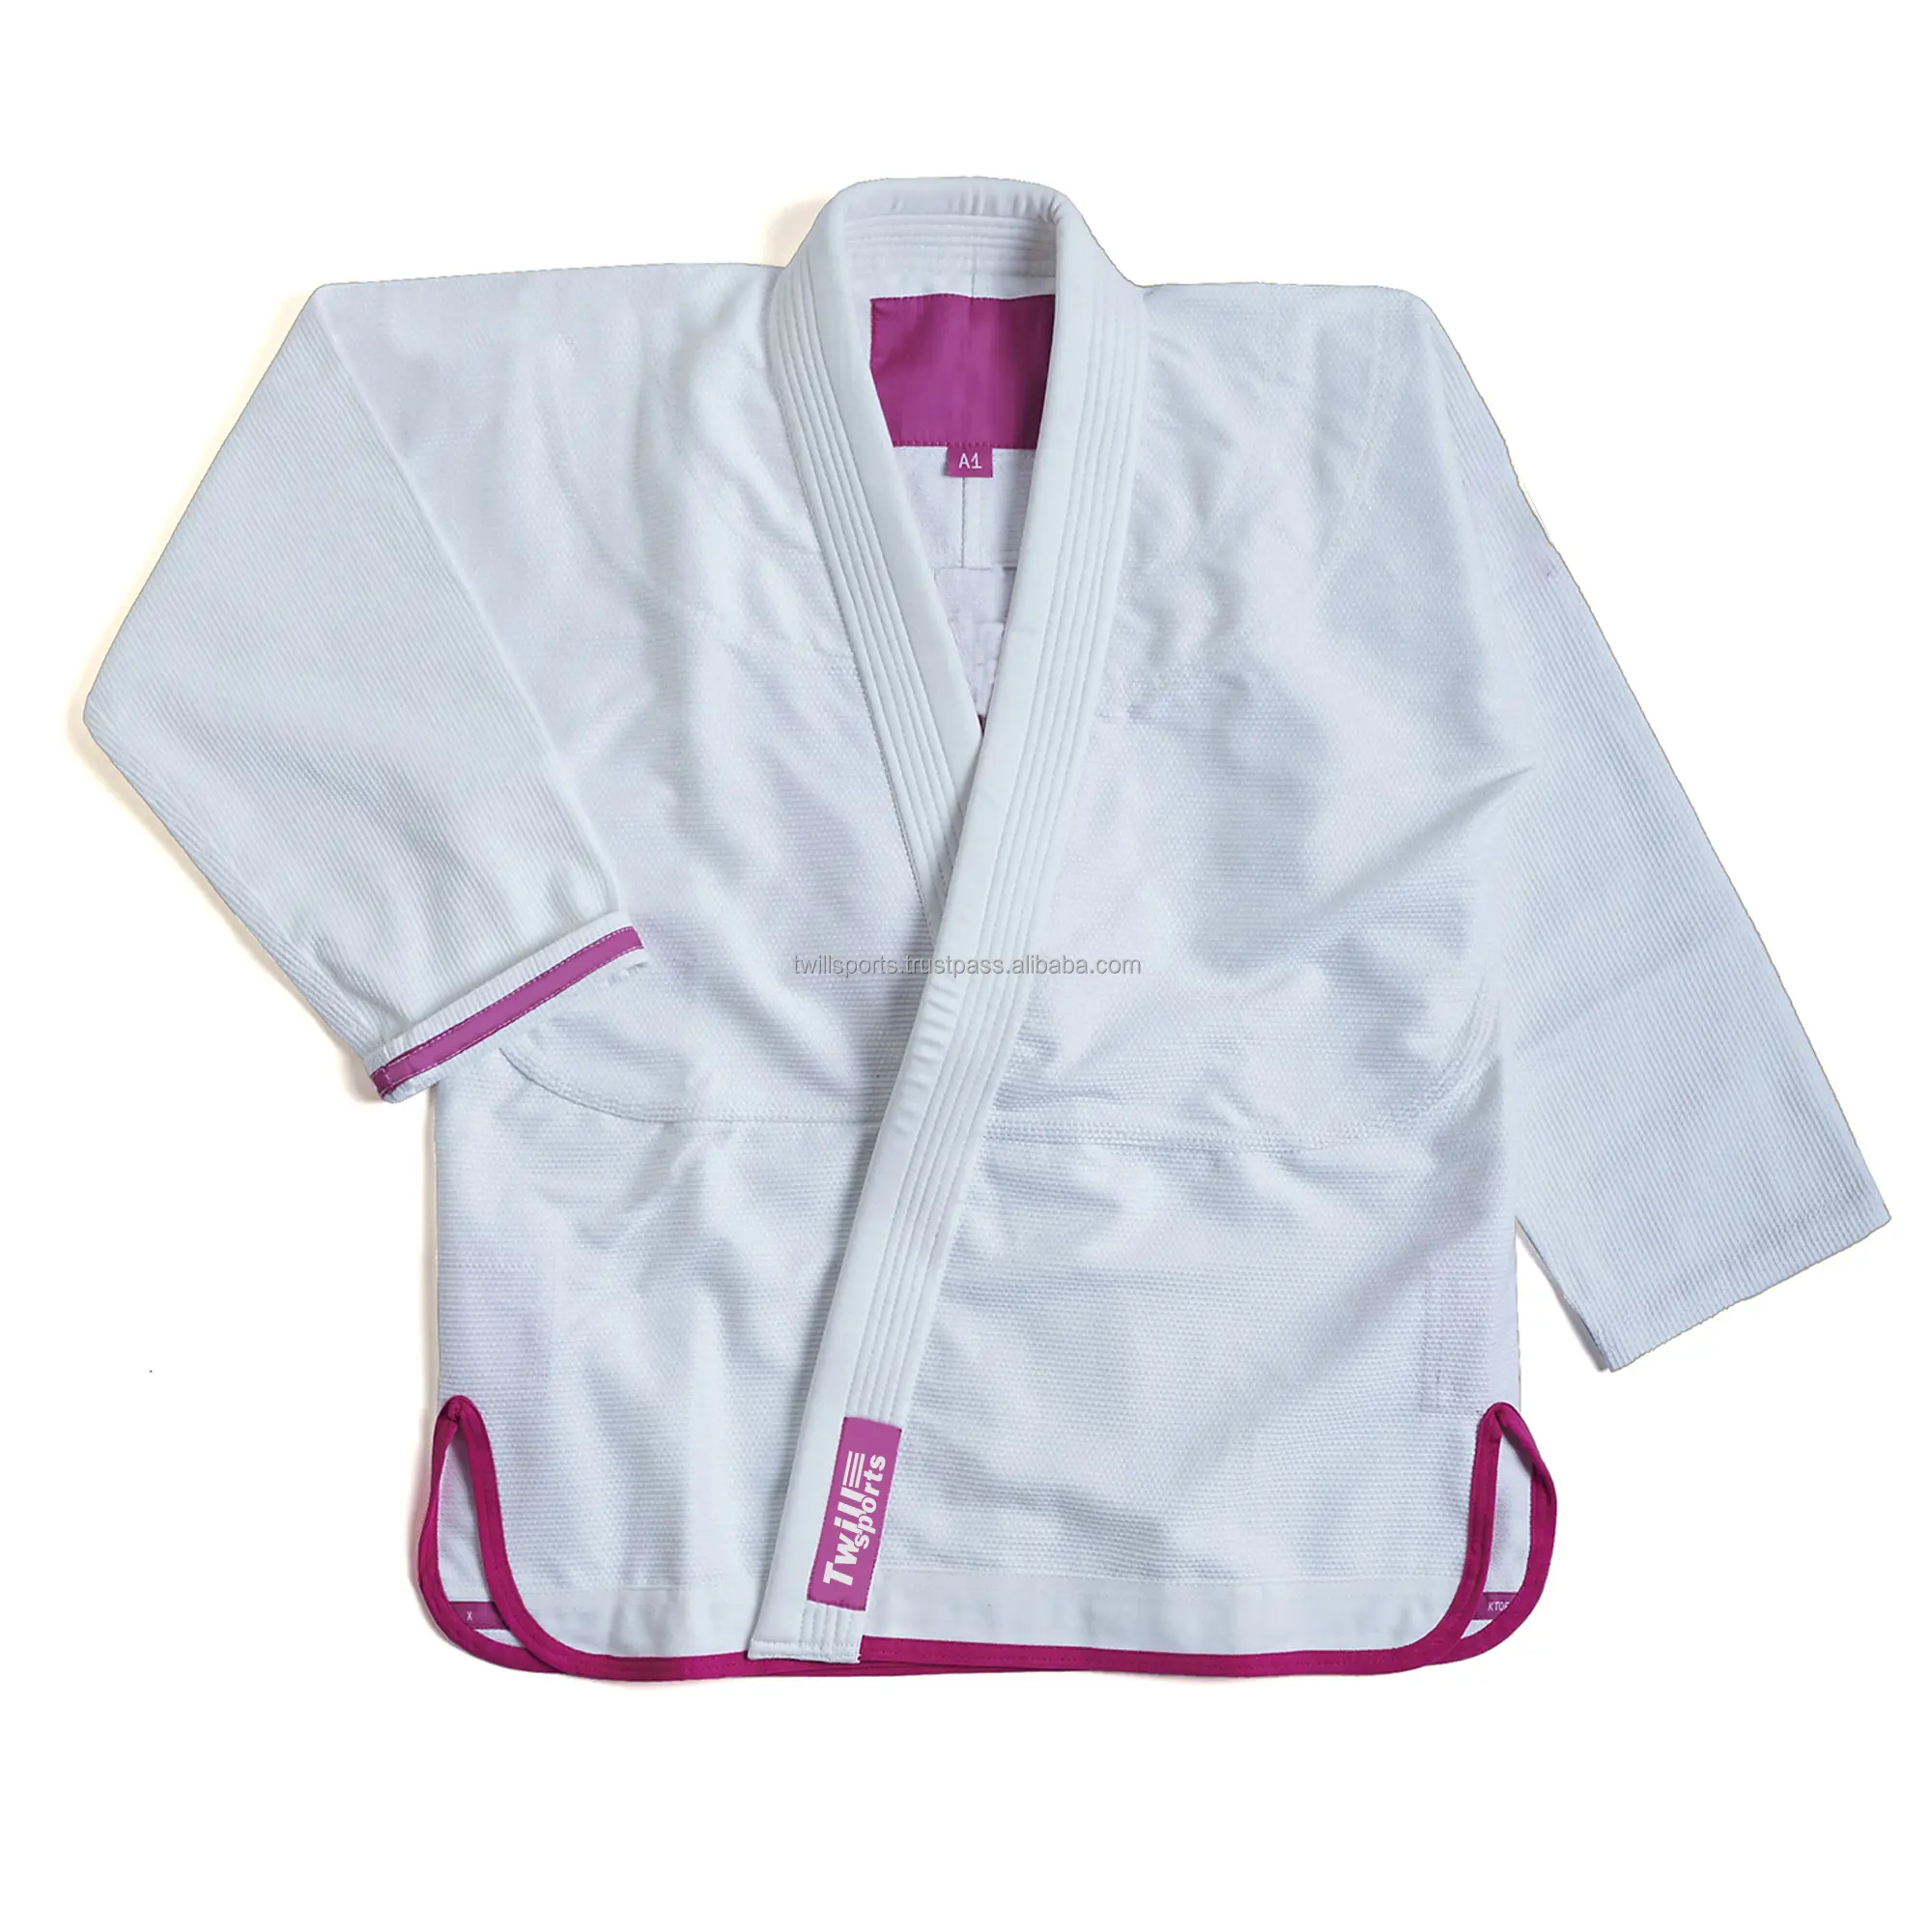 Tafon 450 gsm Oberteile 240 gsm Hosen Judo Gi Kampfsportuniform Bleichkimono Einzelaufsatz aus Pakistan